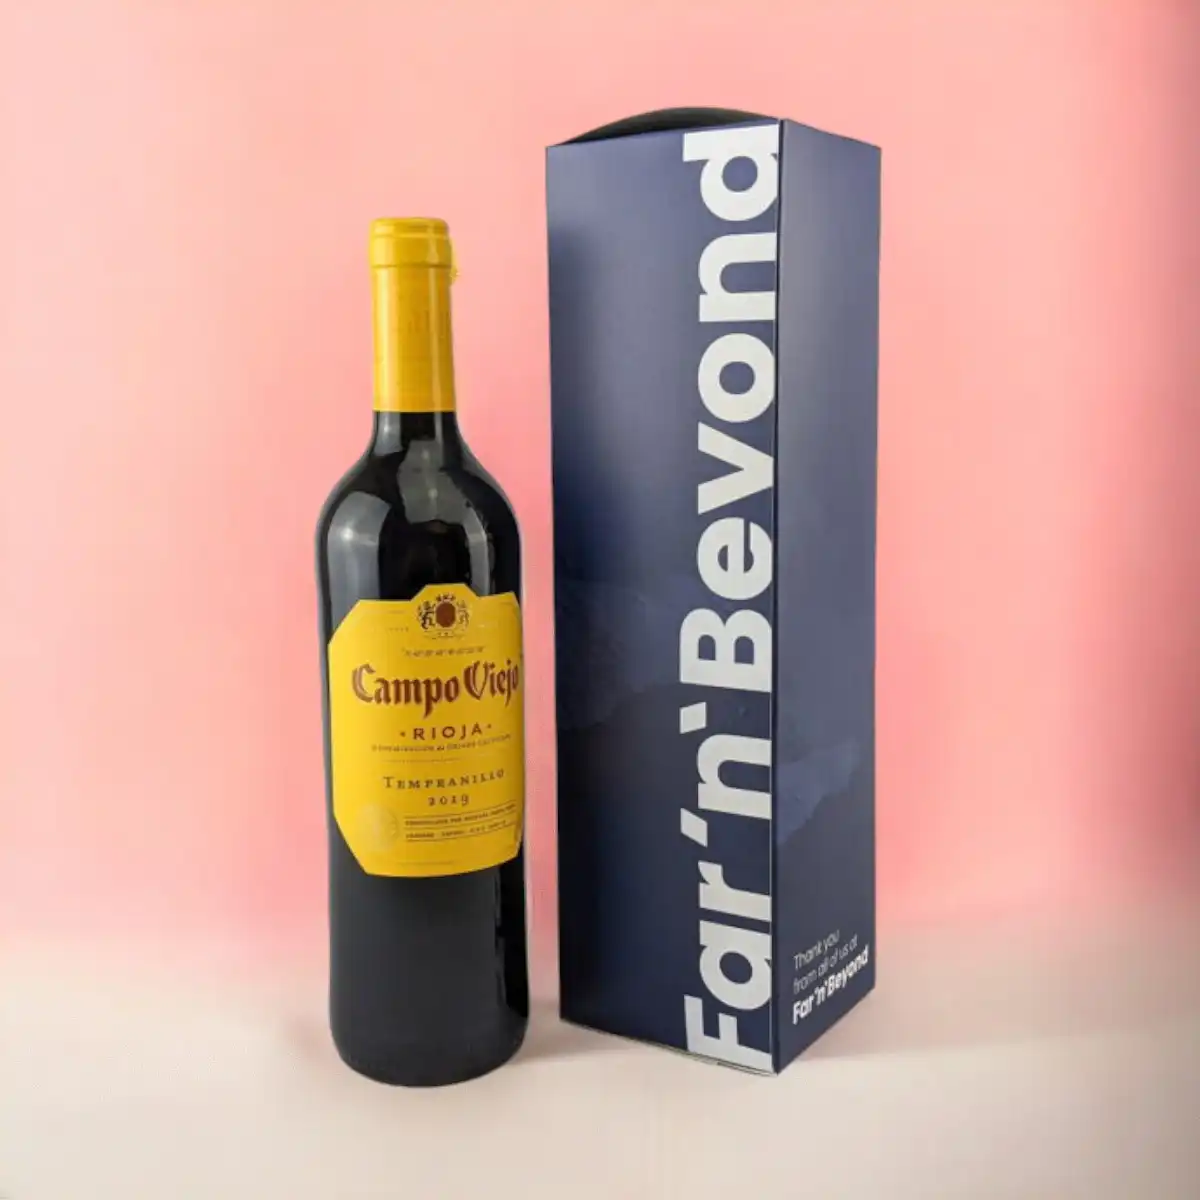 branded-wine-bottle-boxes